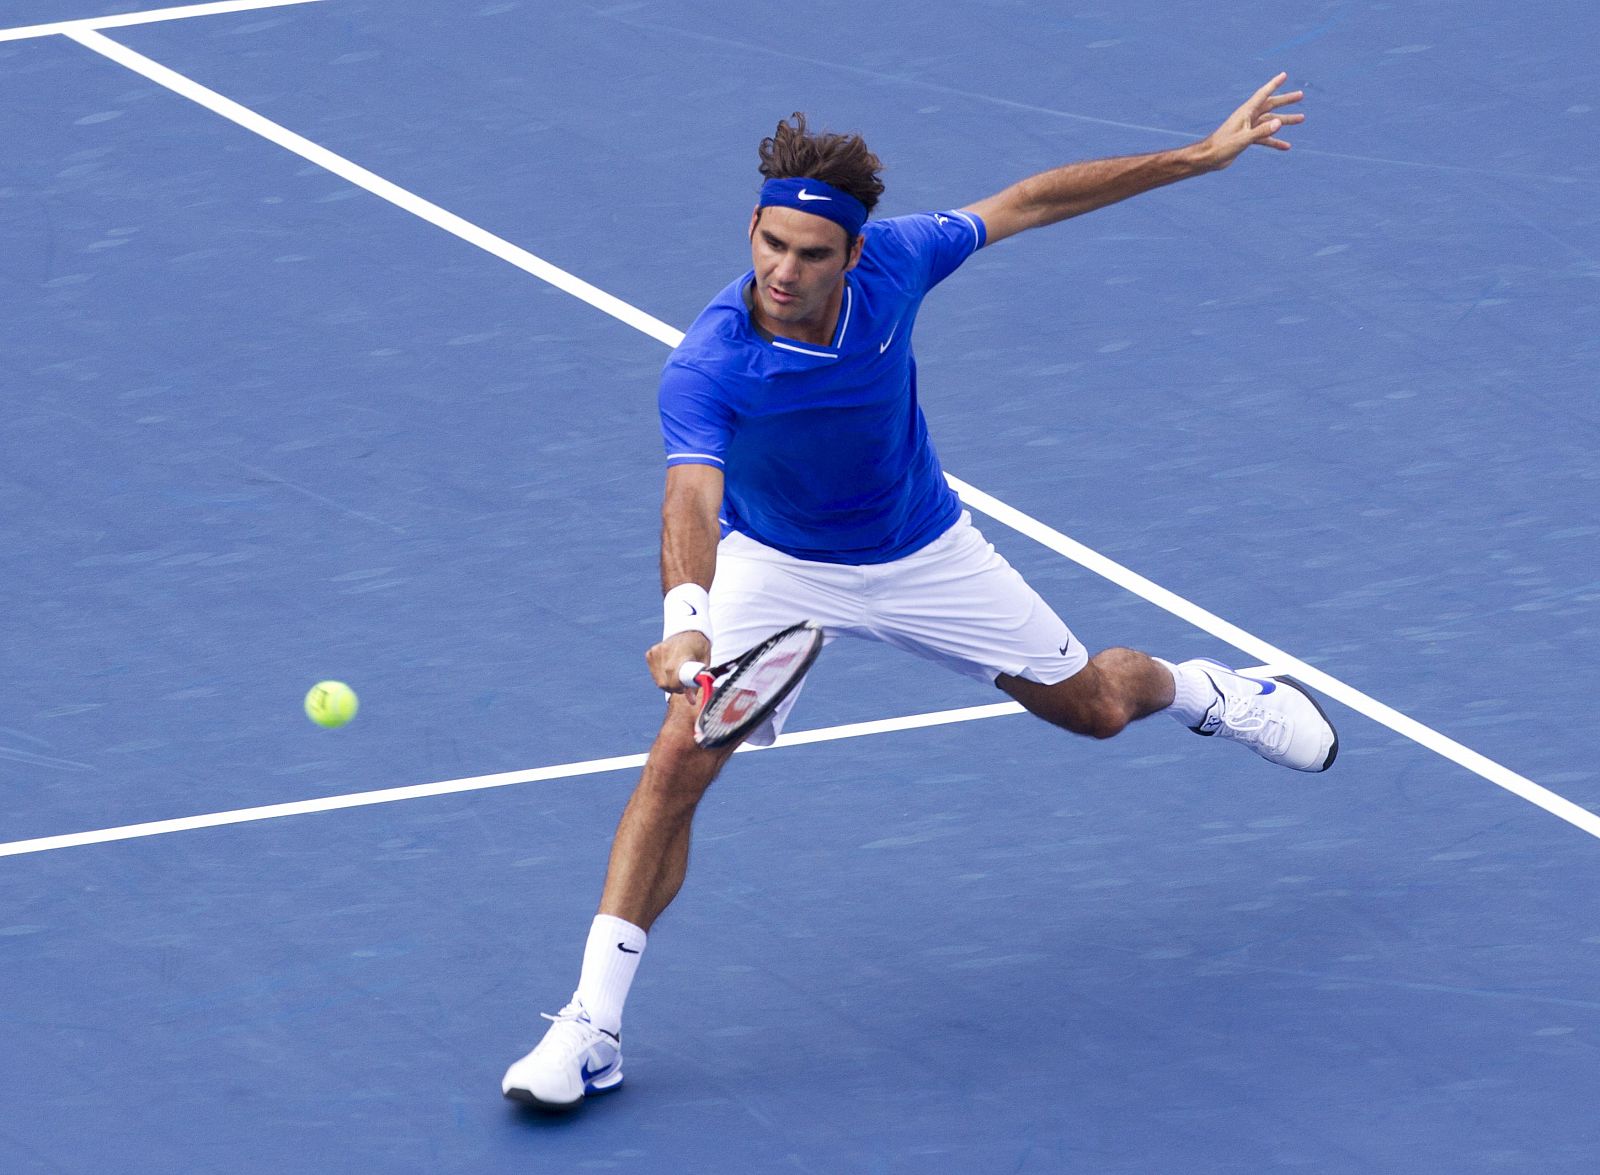 Roger Federer devuelve una bola al canadiense Pospisil